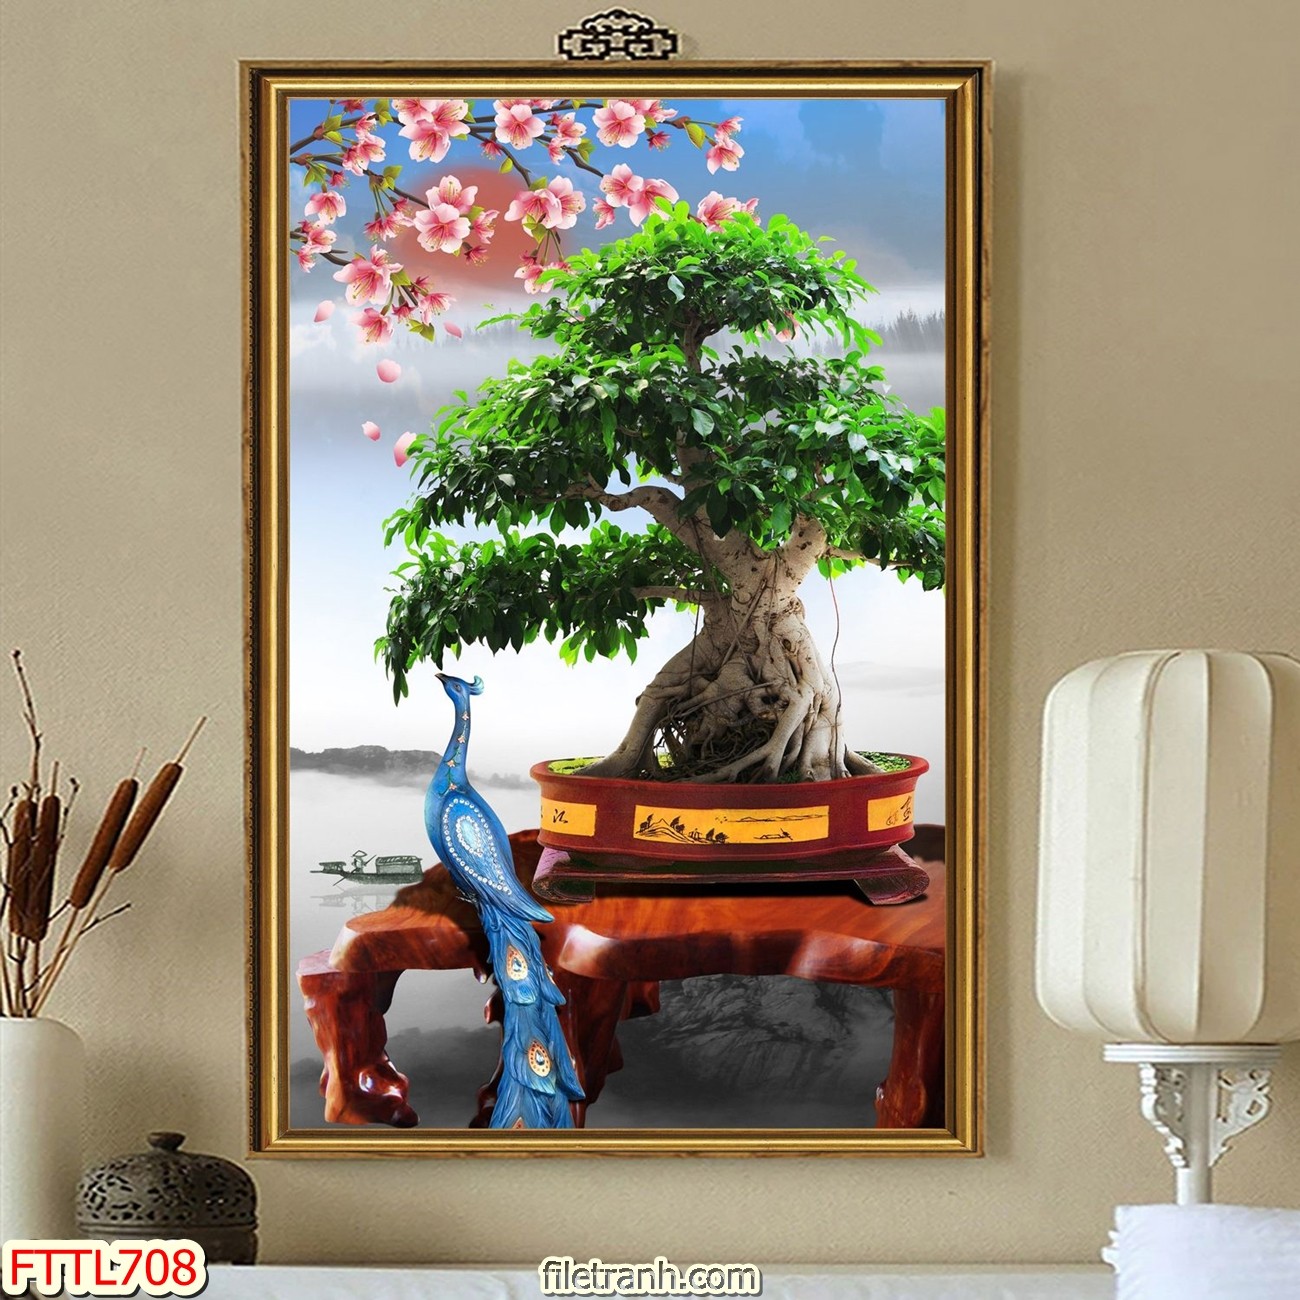 https://filetranh.com/file-tranh-chau-mai-bonsai/file-tranh-chau-mai-bonsai-fttl708.html